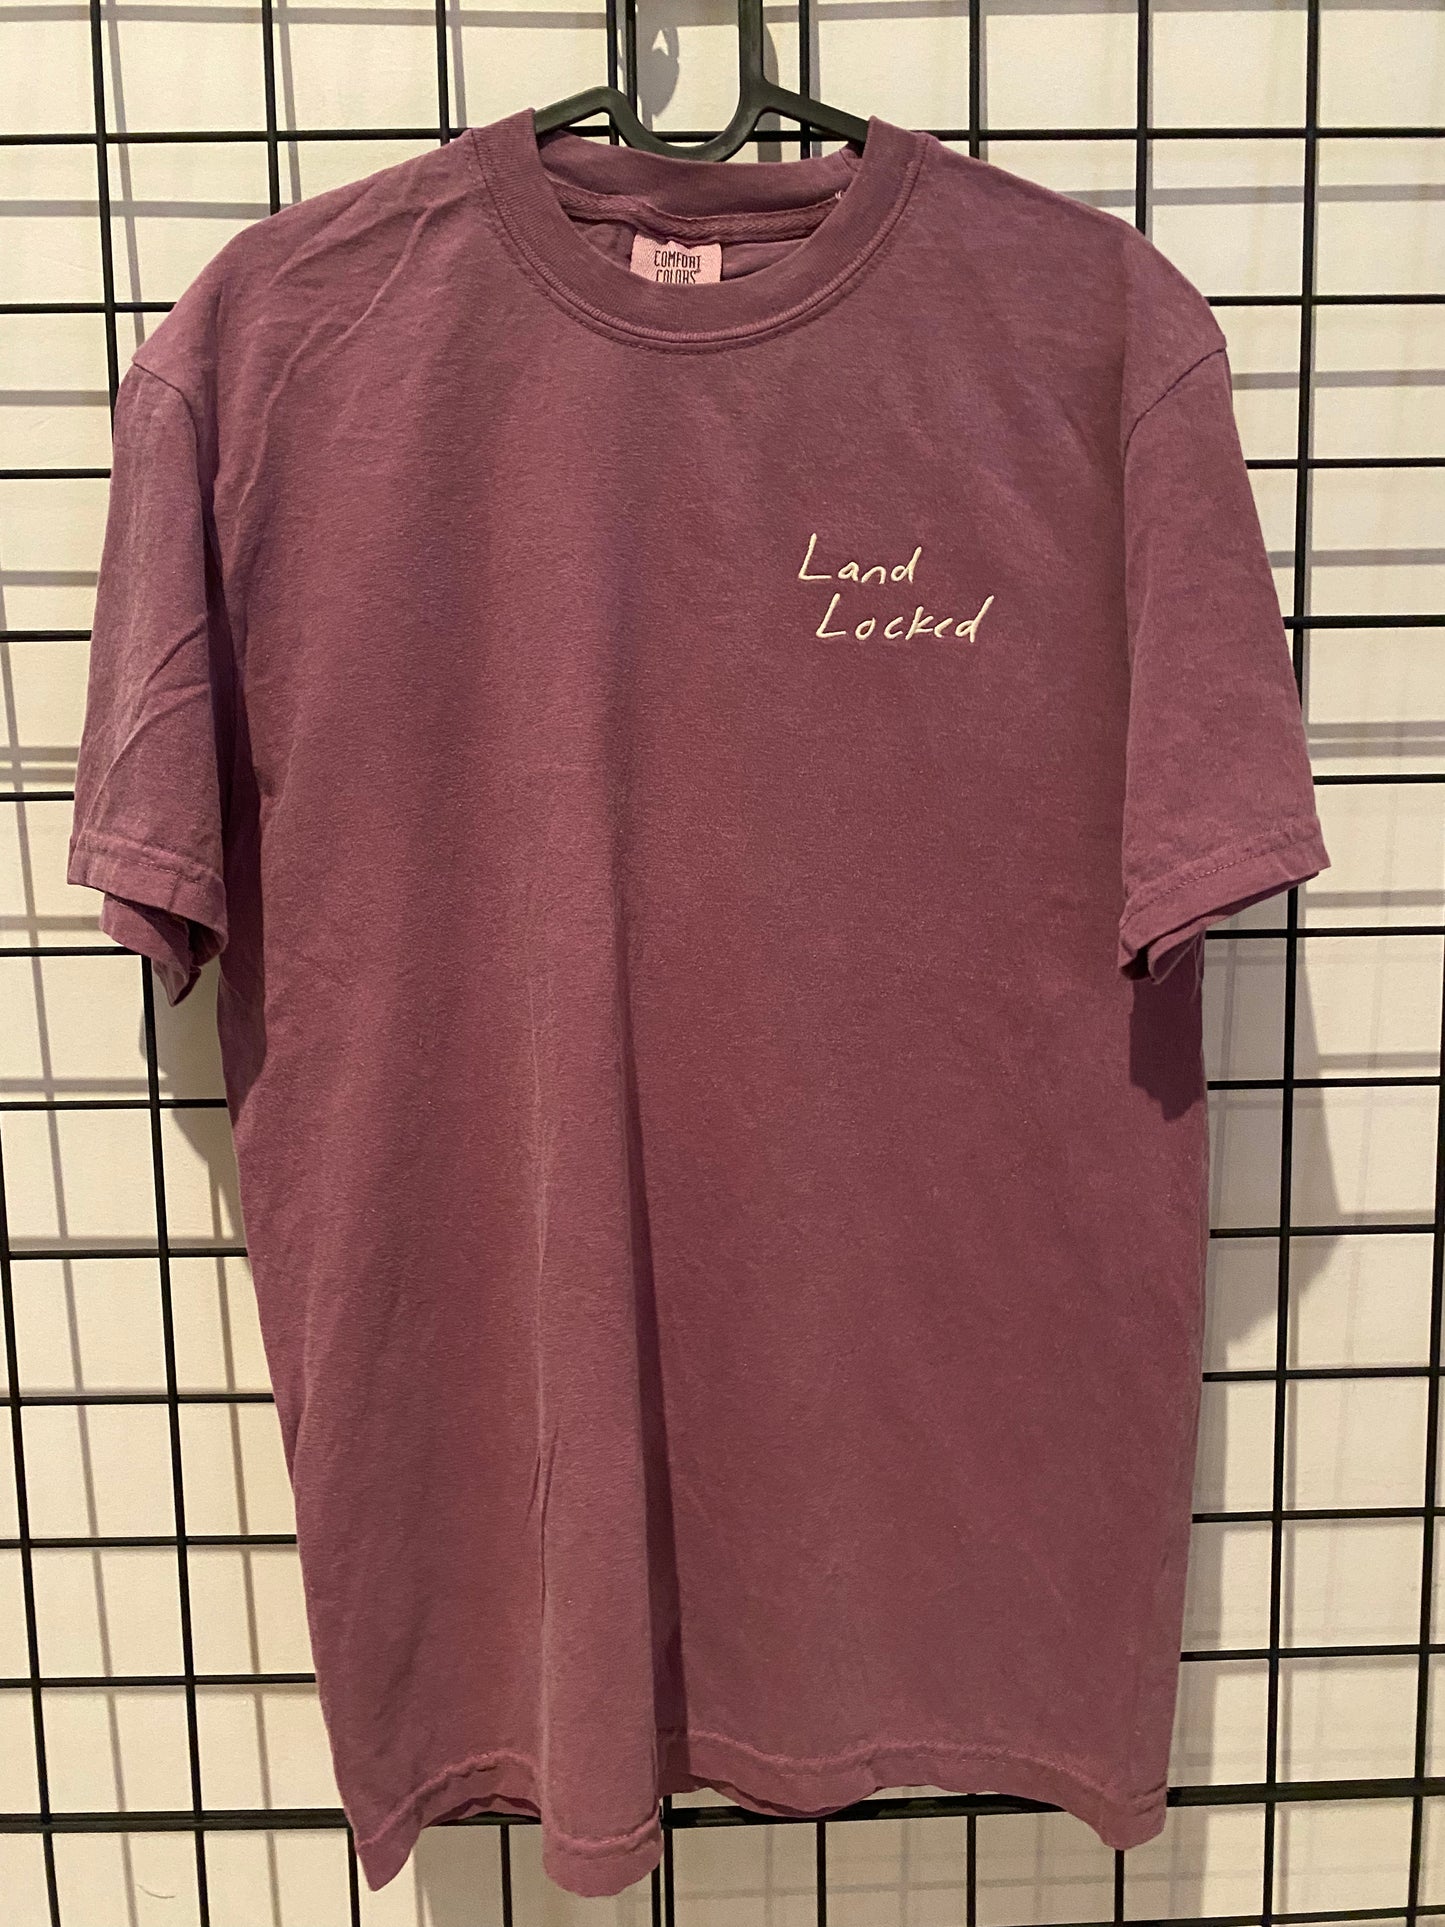 Land Locked - T-Shirt (Purple)